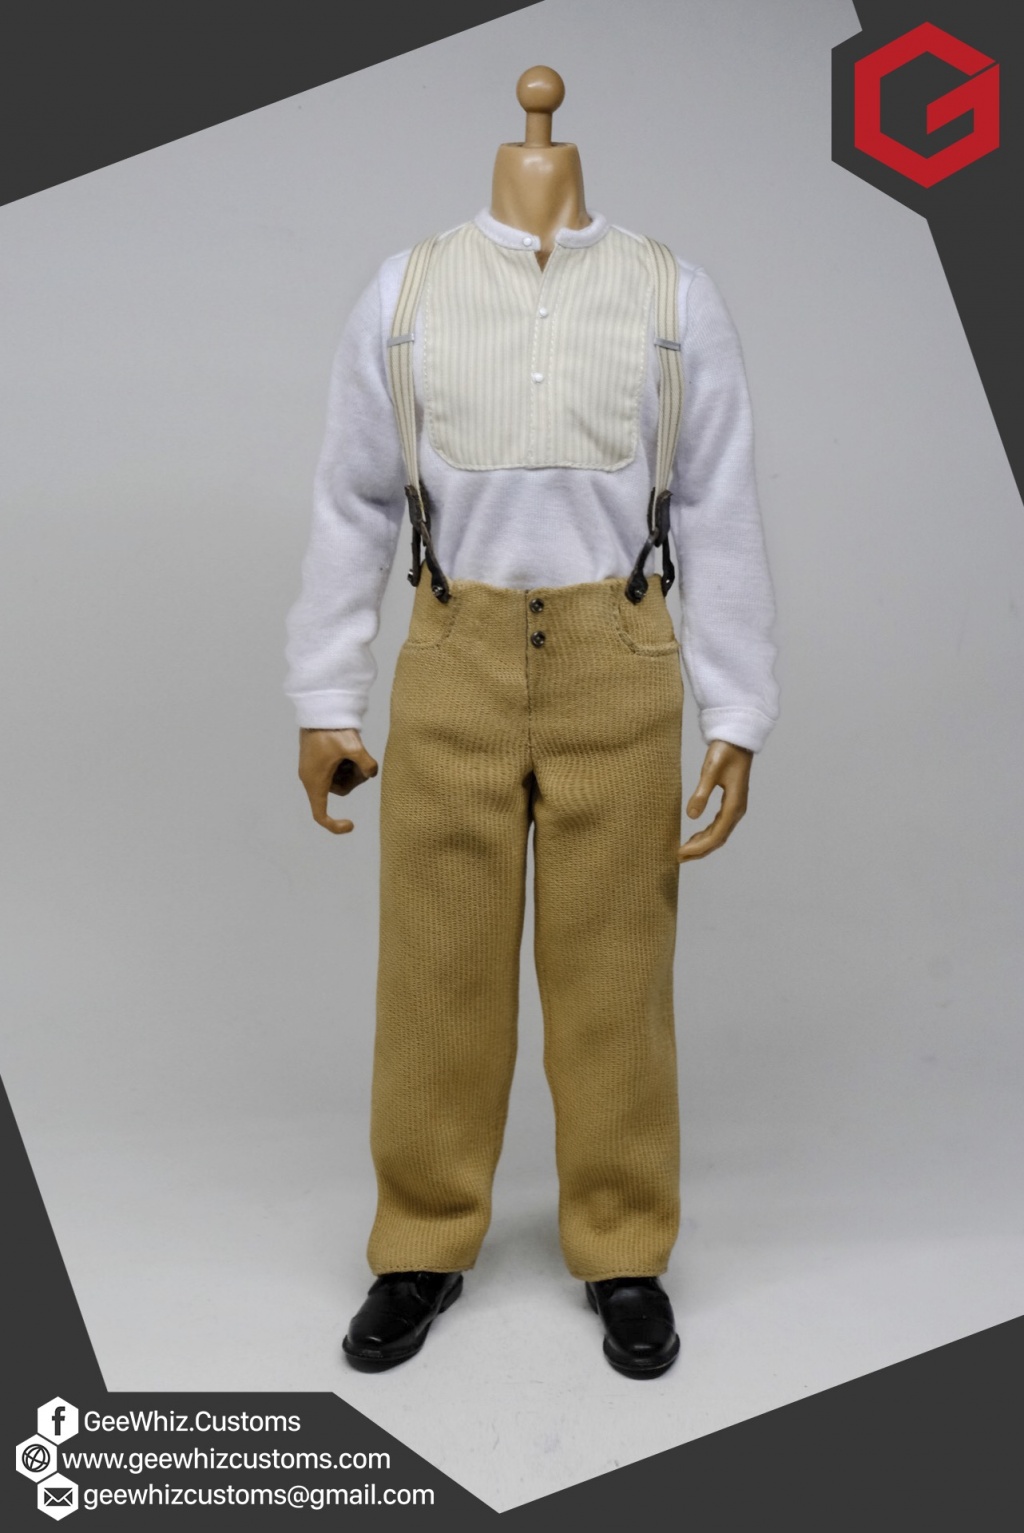 Geewhiz Customs: Jack Dawson 1:6 Scale Outfit